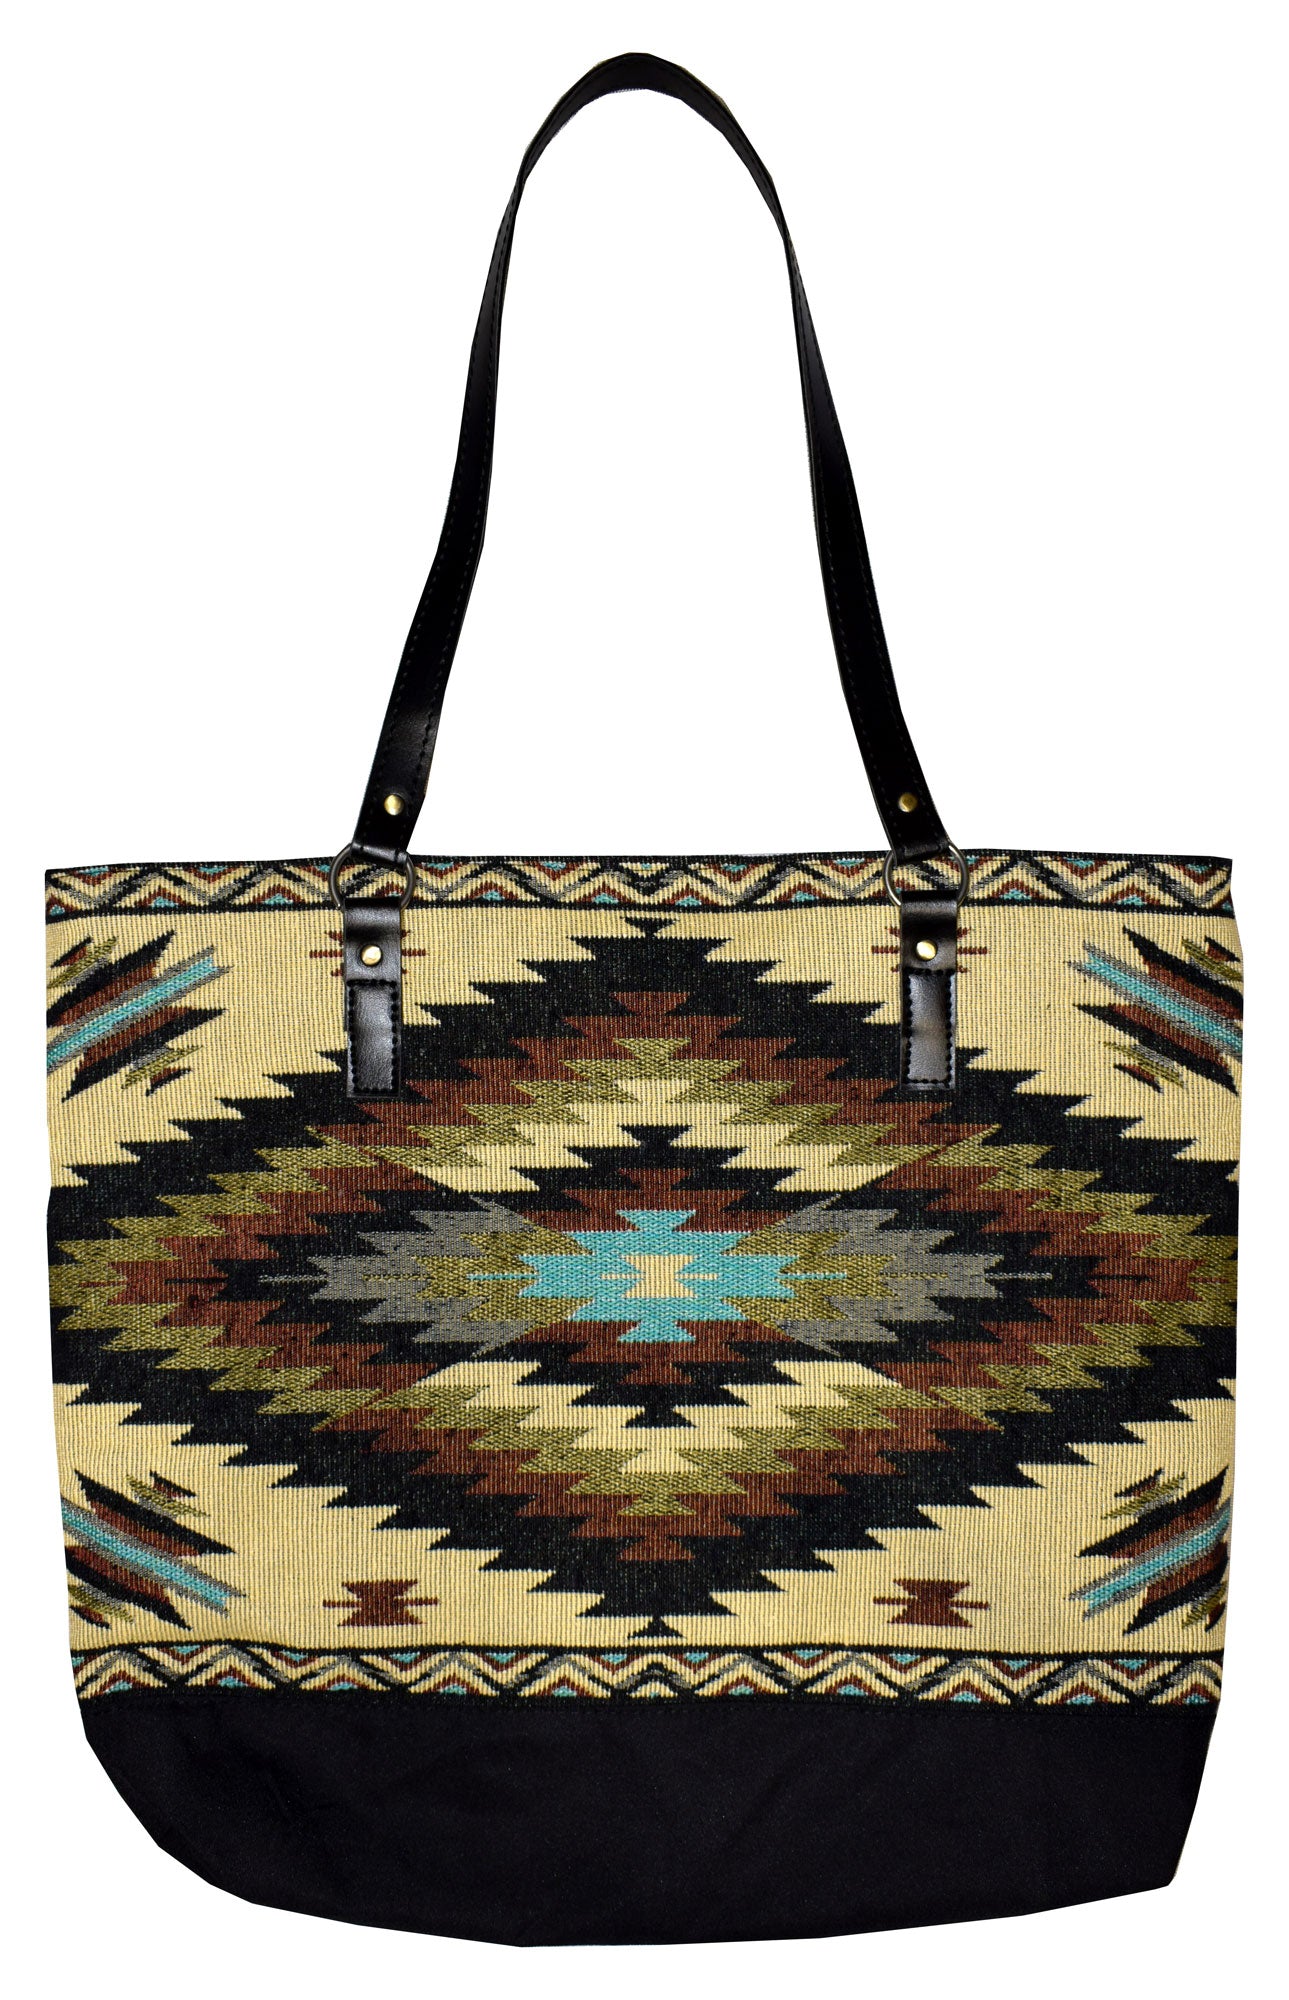 ''Southwest Jacquard Tote Bags, Design #5''